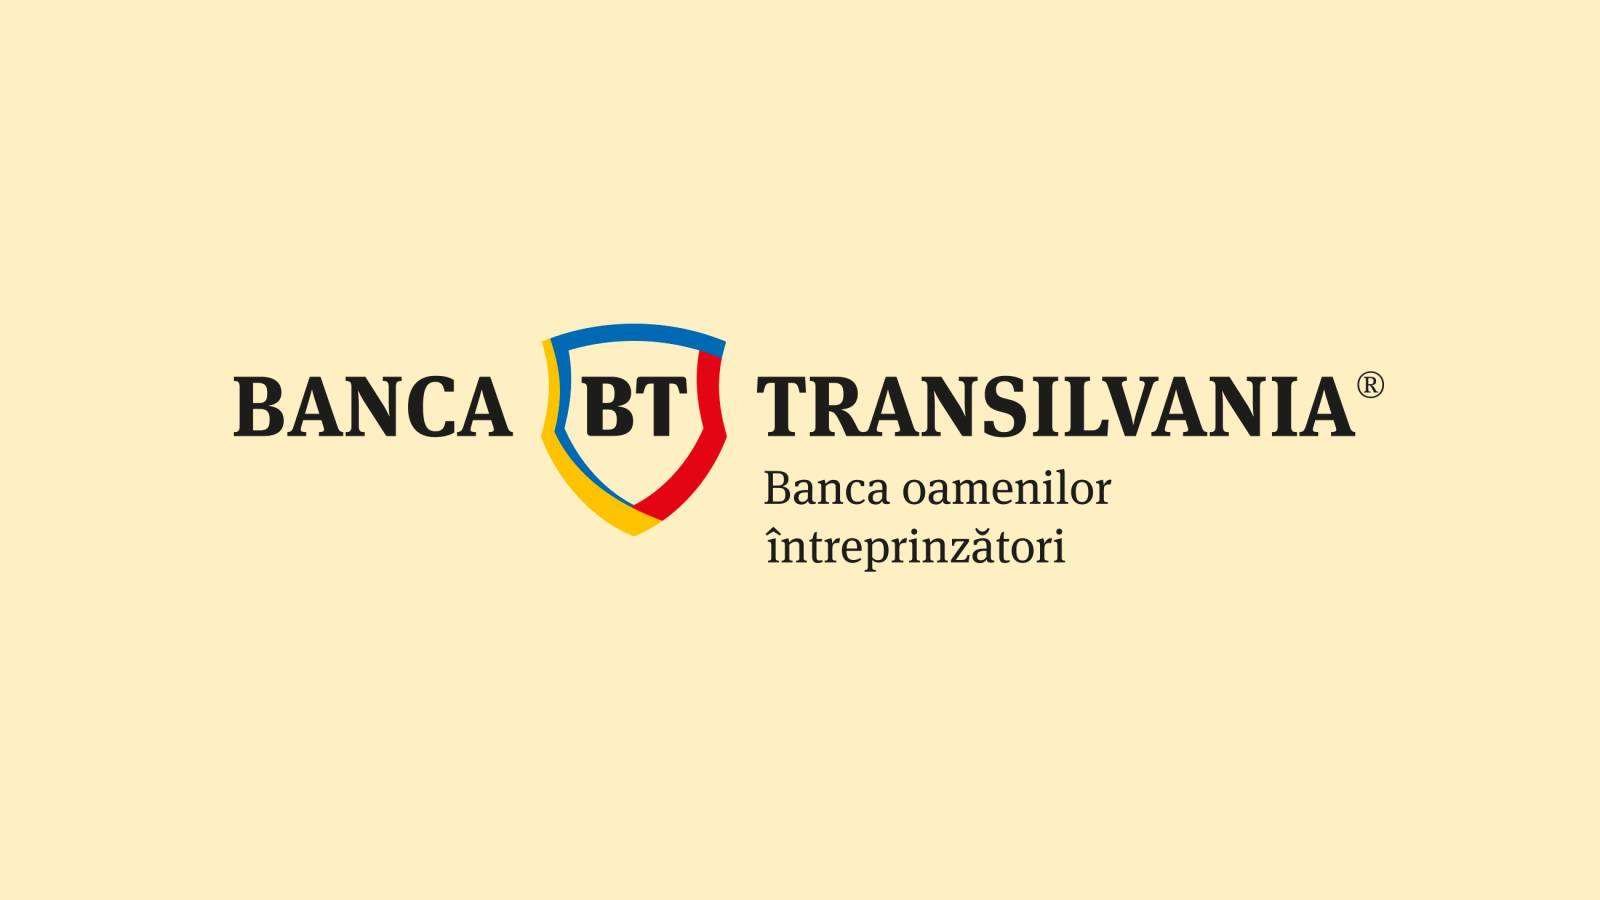 BANCA Transilvania Romanii Giv Banca Oameni besked GRATIS